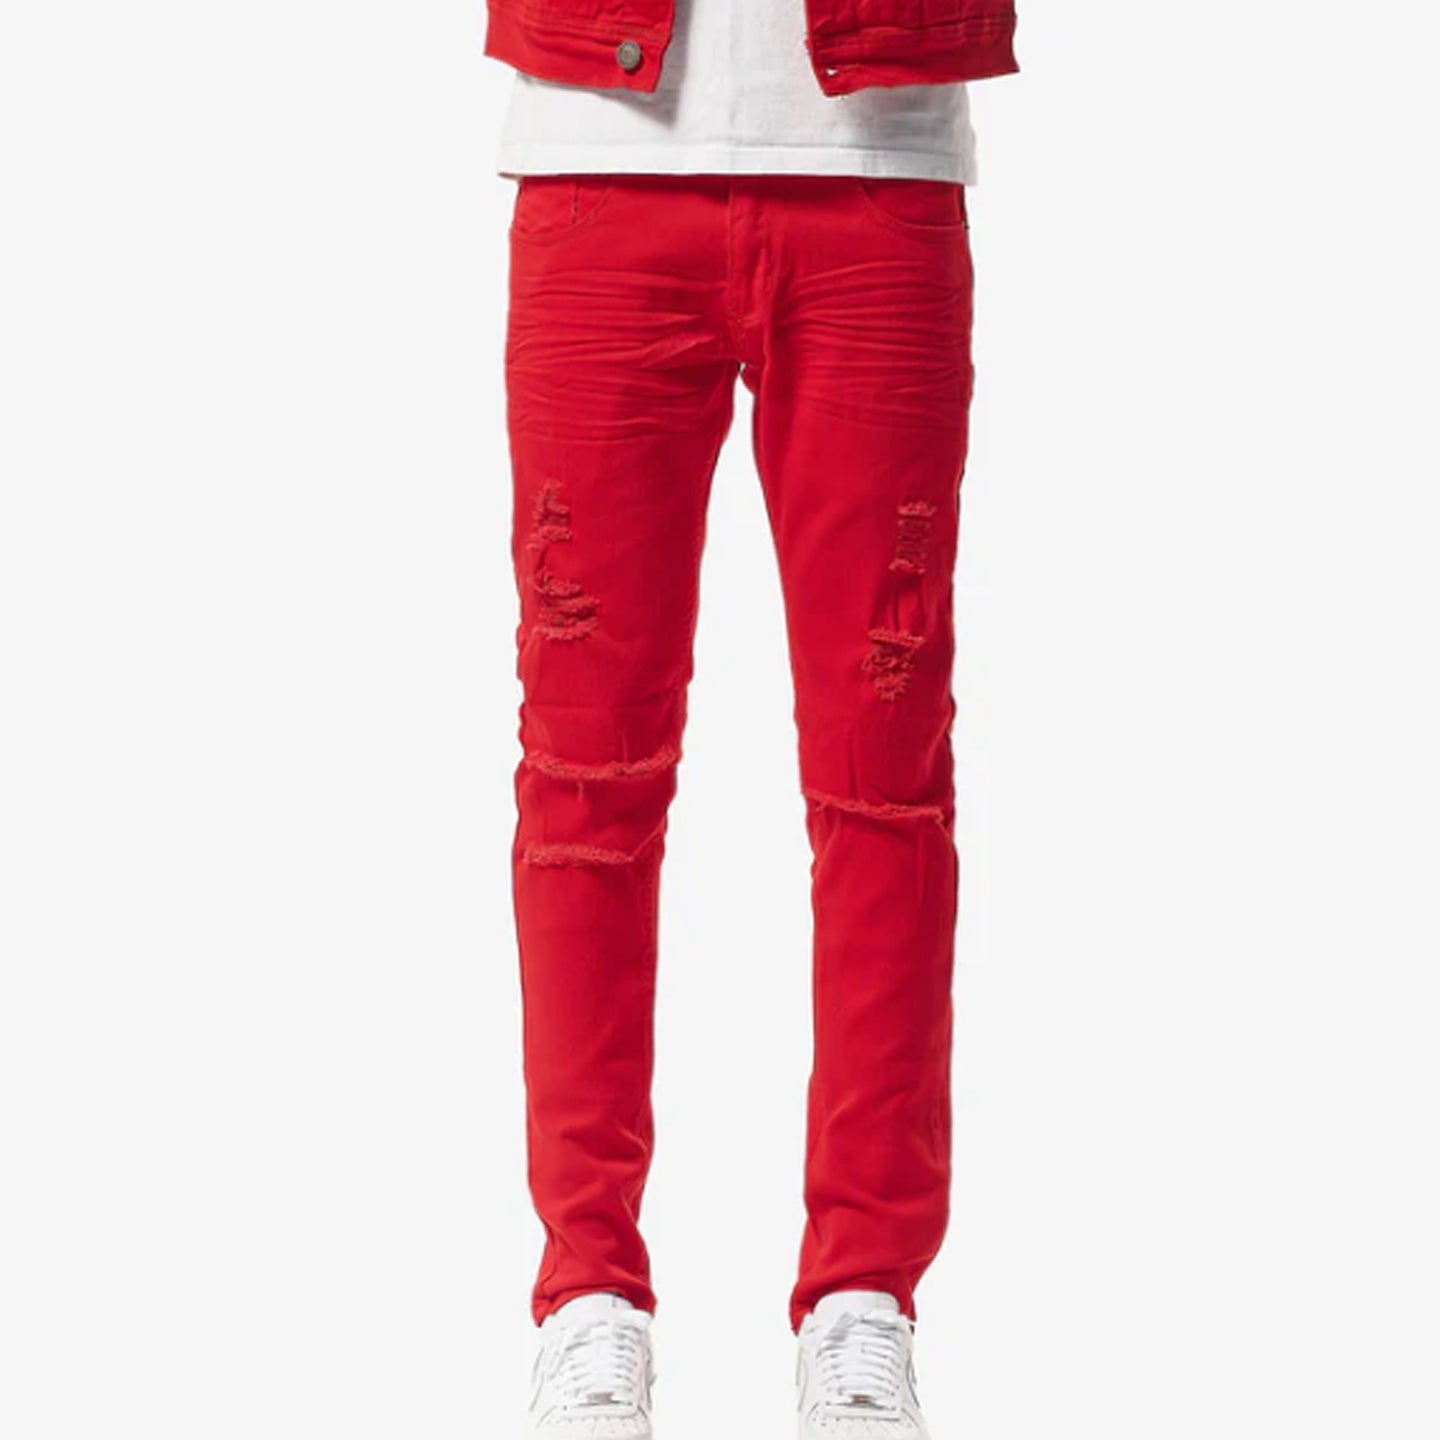 Red Skinny Jeans For Men